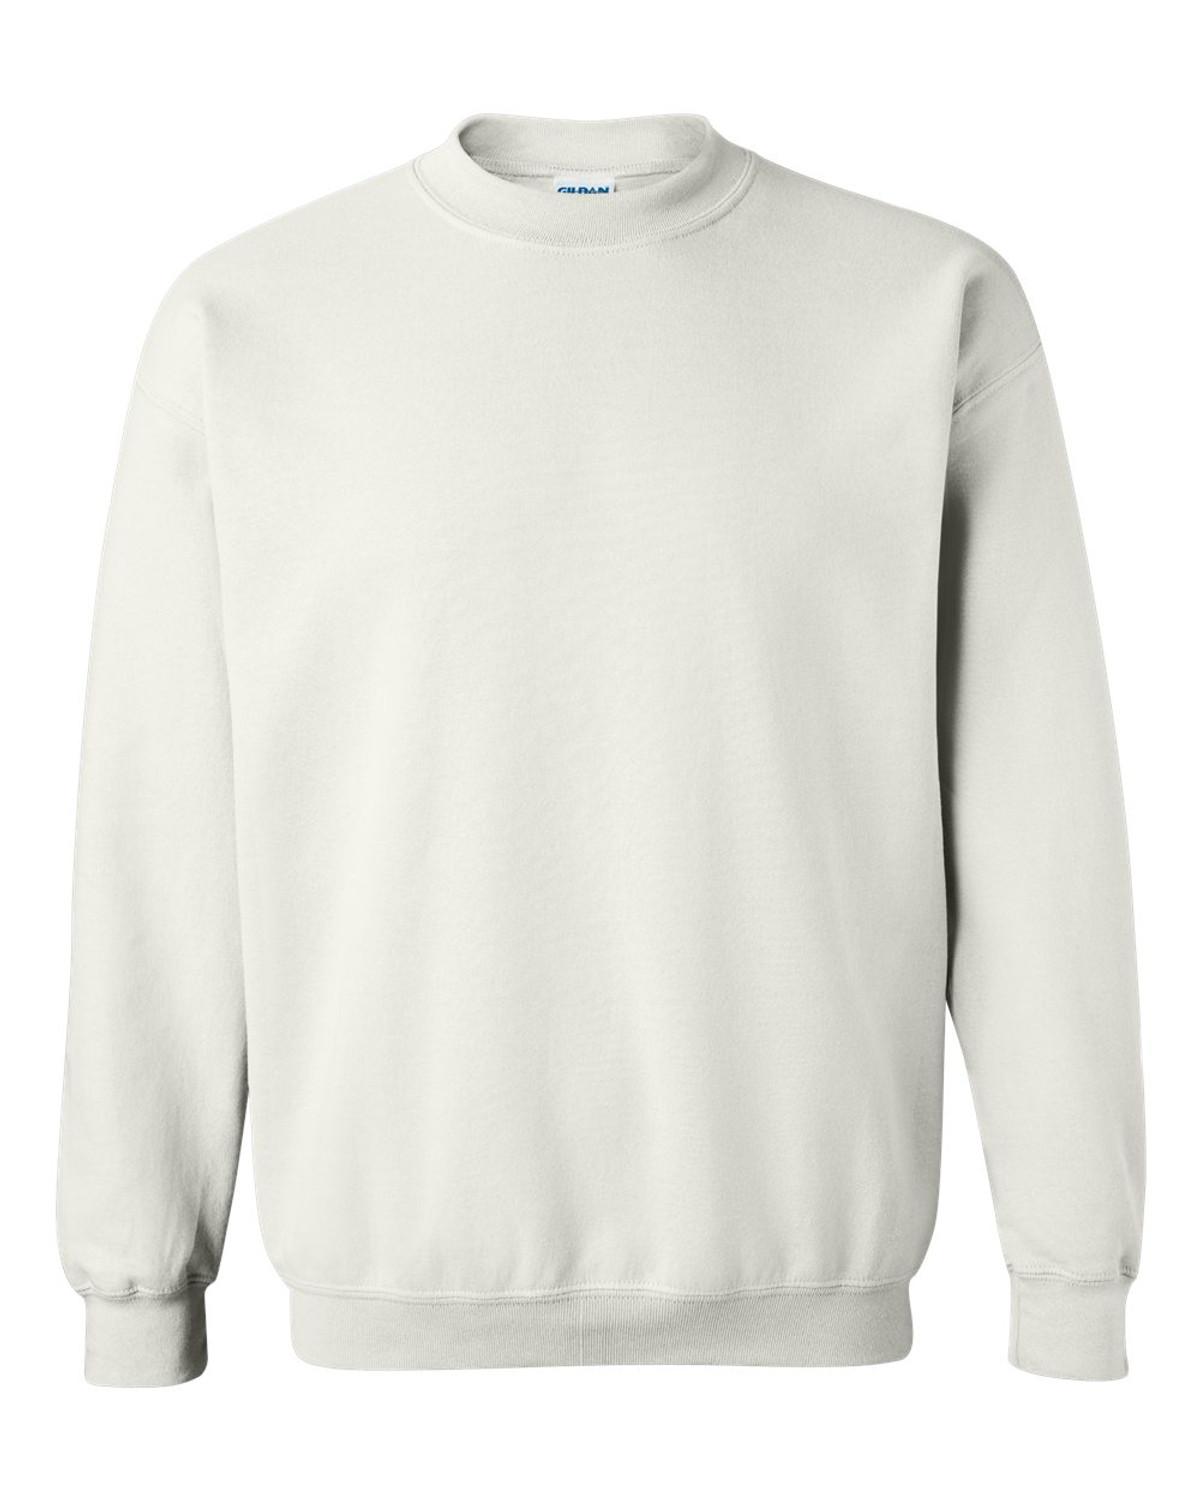 Brand New Gildan 18000 Heavy Blend™ Crewneck Sweatshirt On Sale!